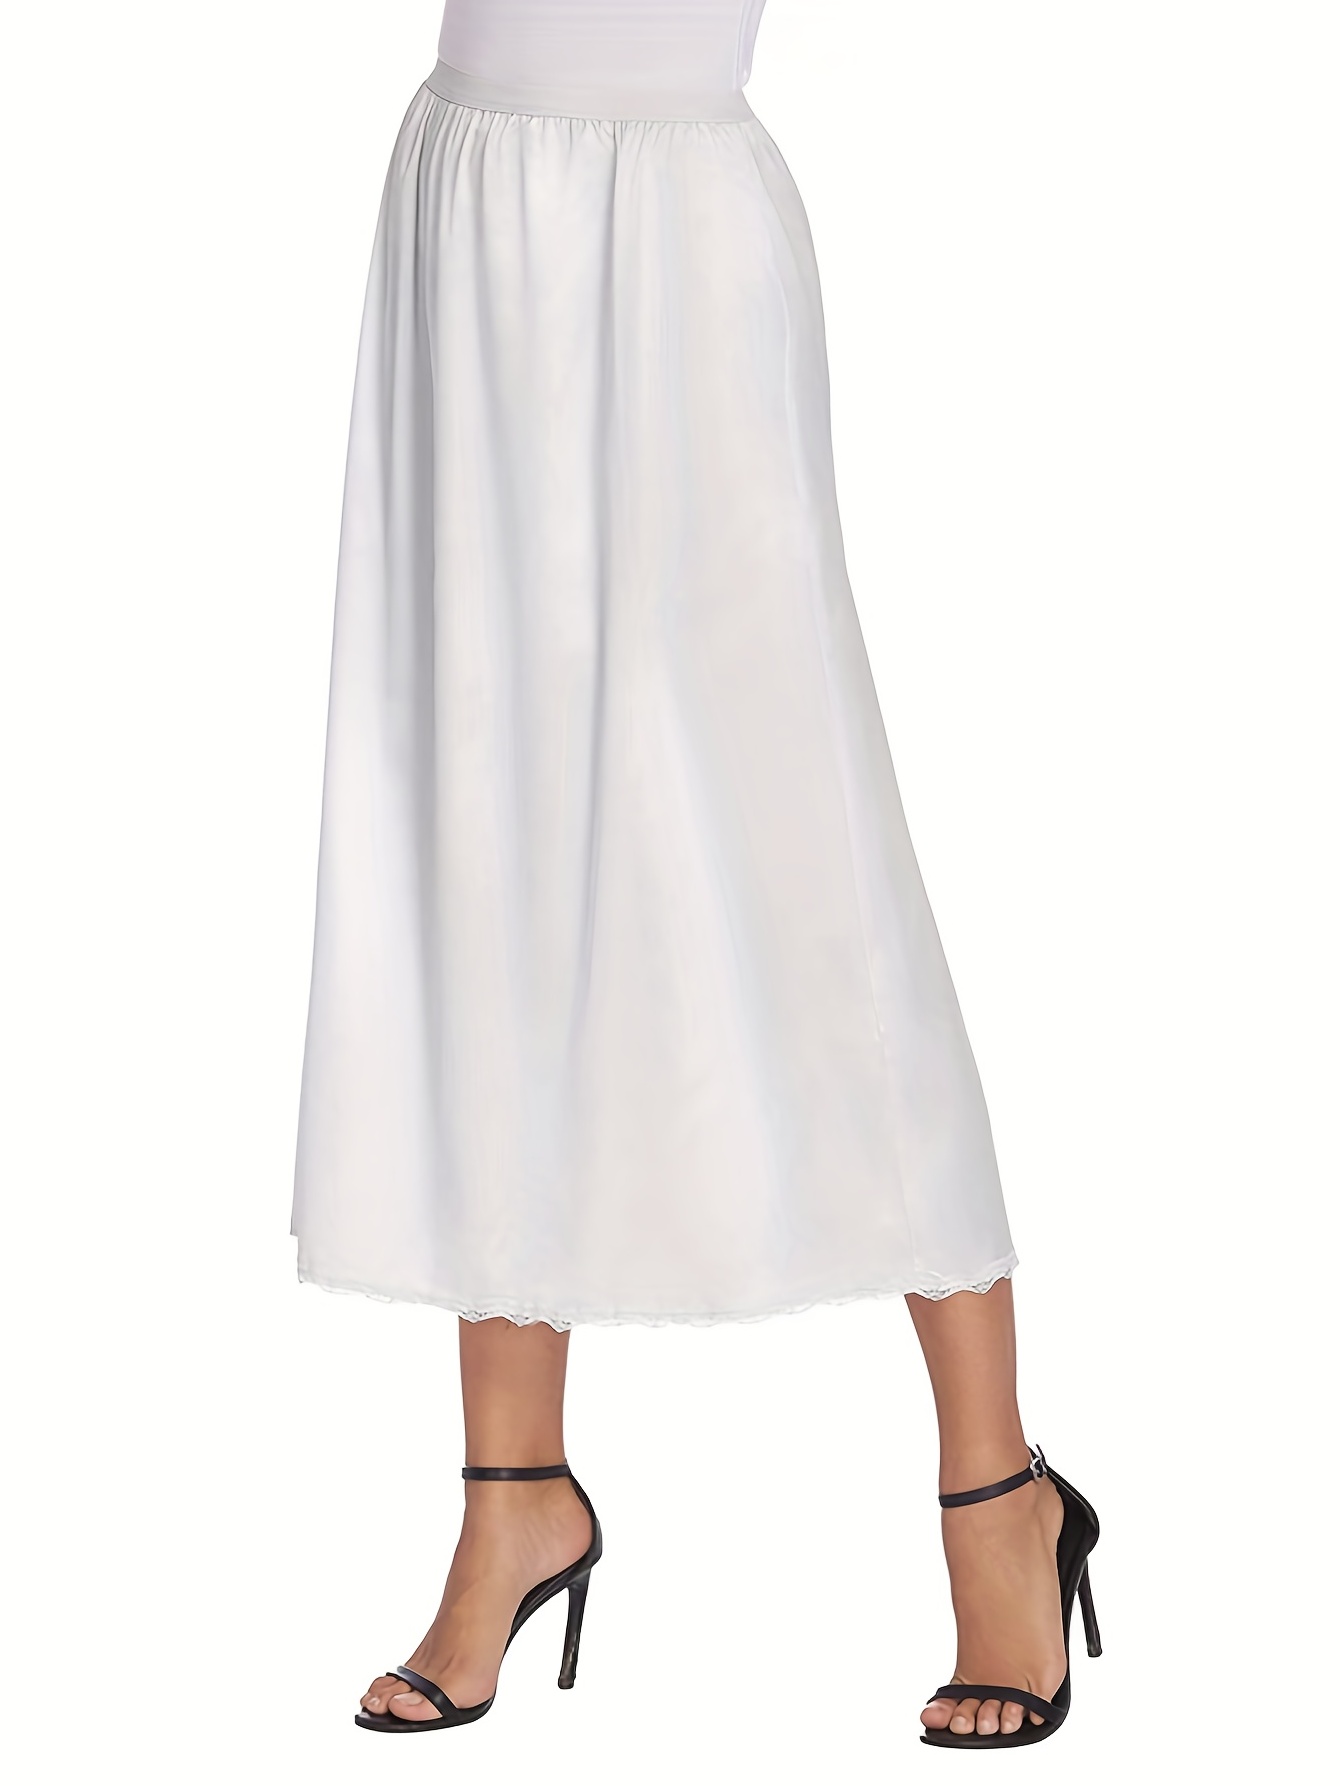 Foral Lace Trim Solid Skirt, Side Split Stretch Half Slips Petticoat ...